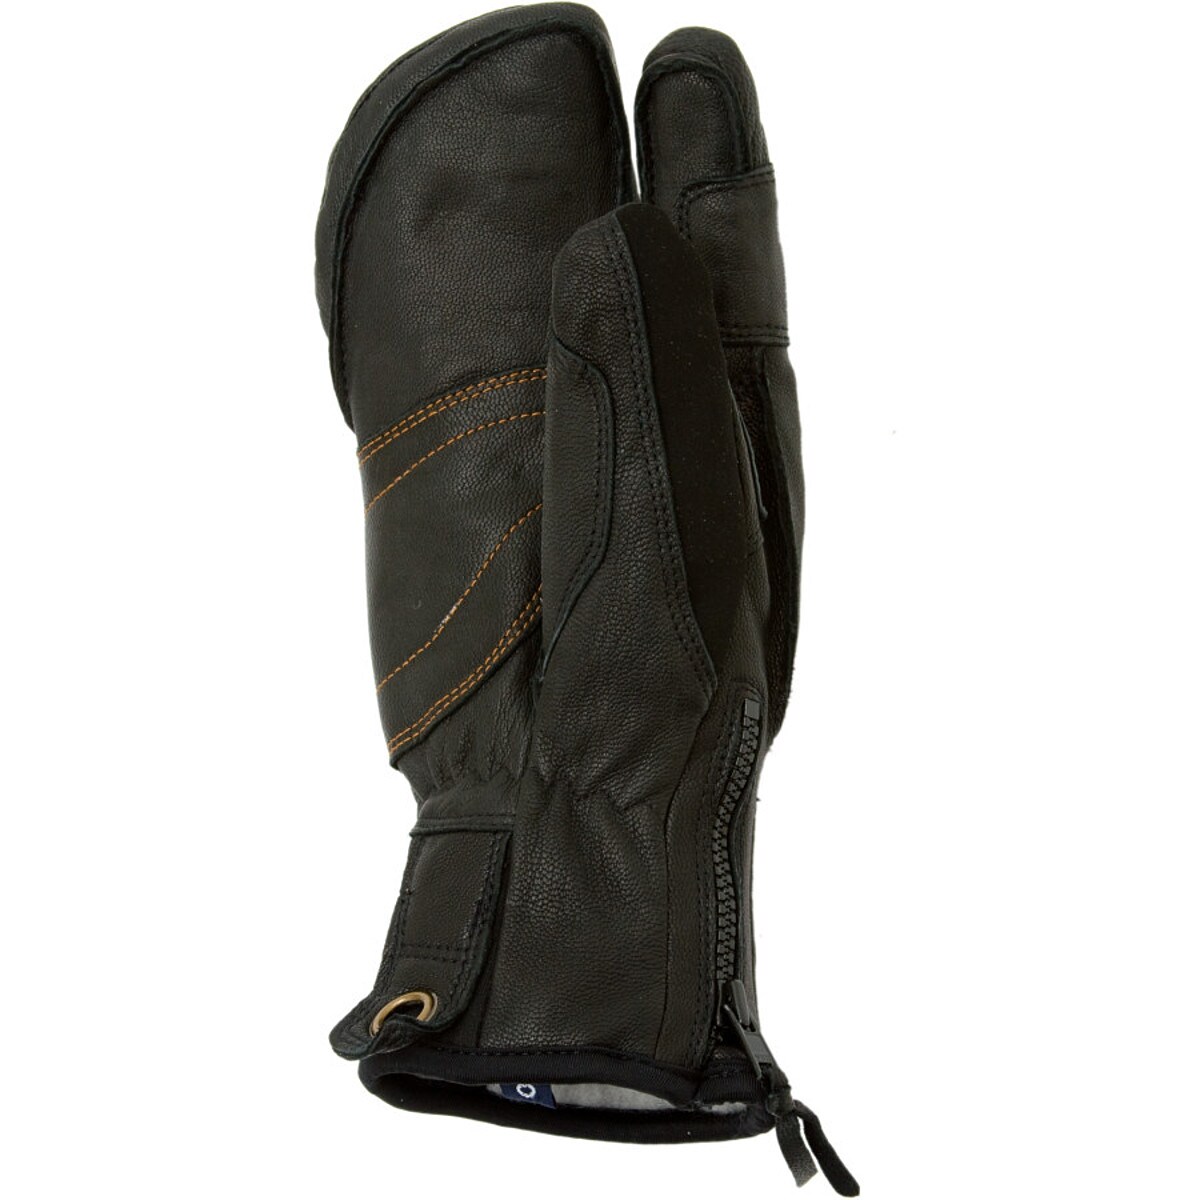 Hestra Seth Morrison Pro Model 3-Finger Glove - Accessories